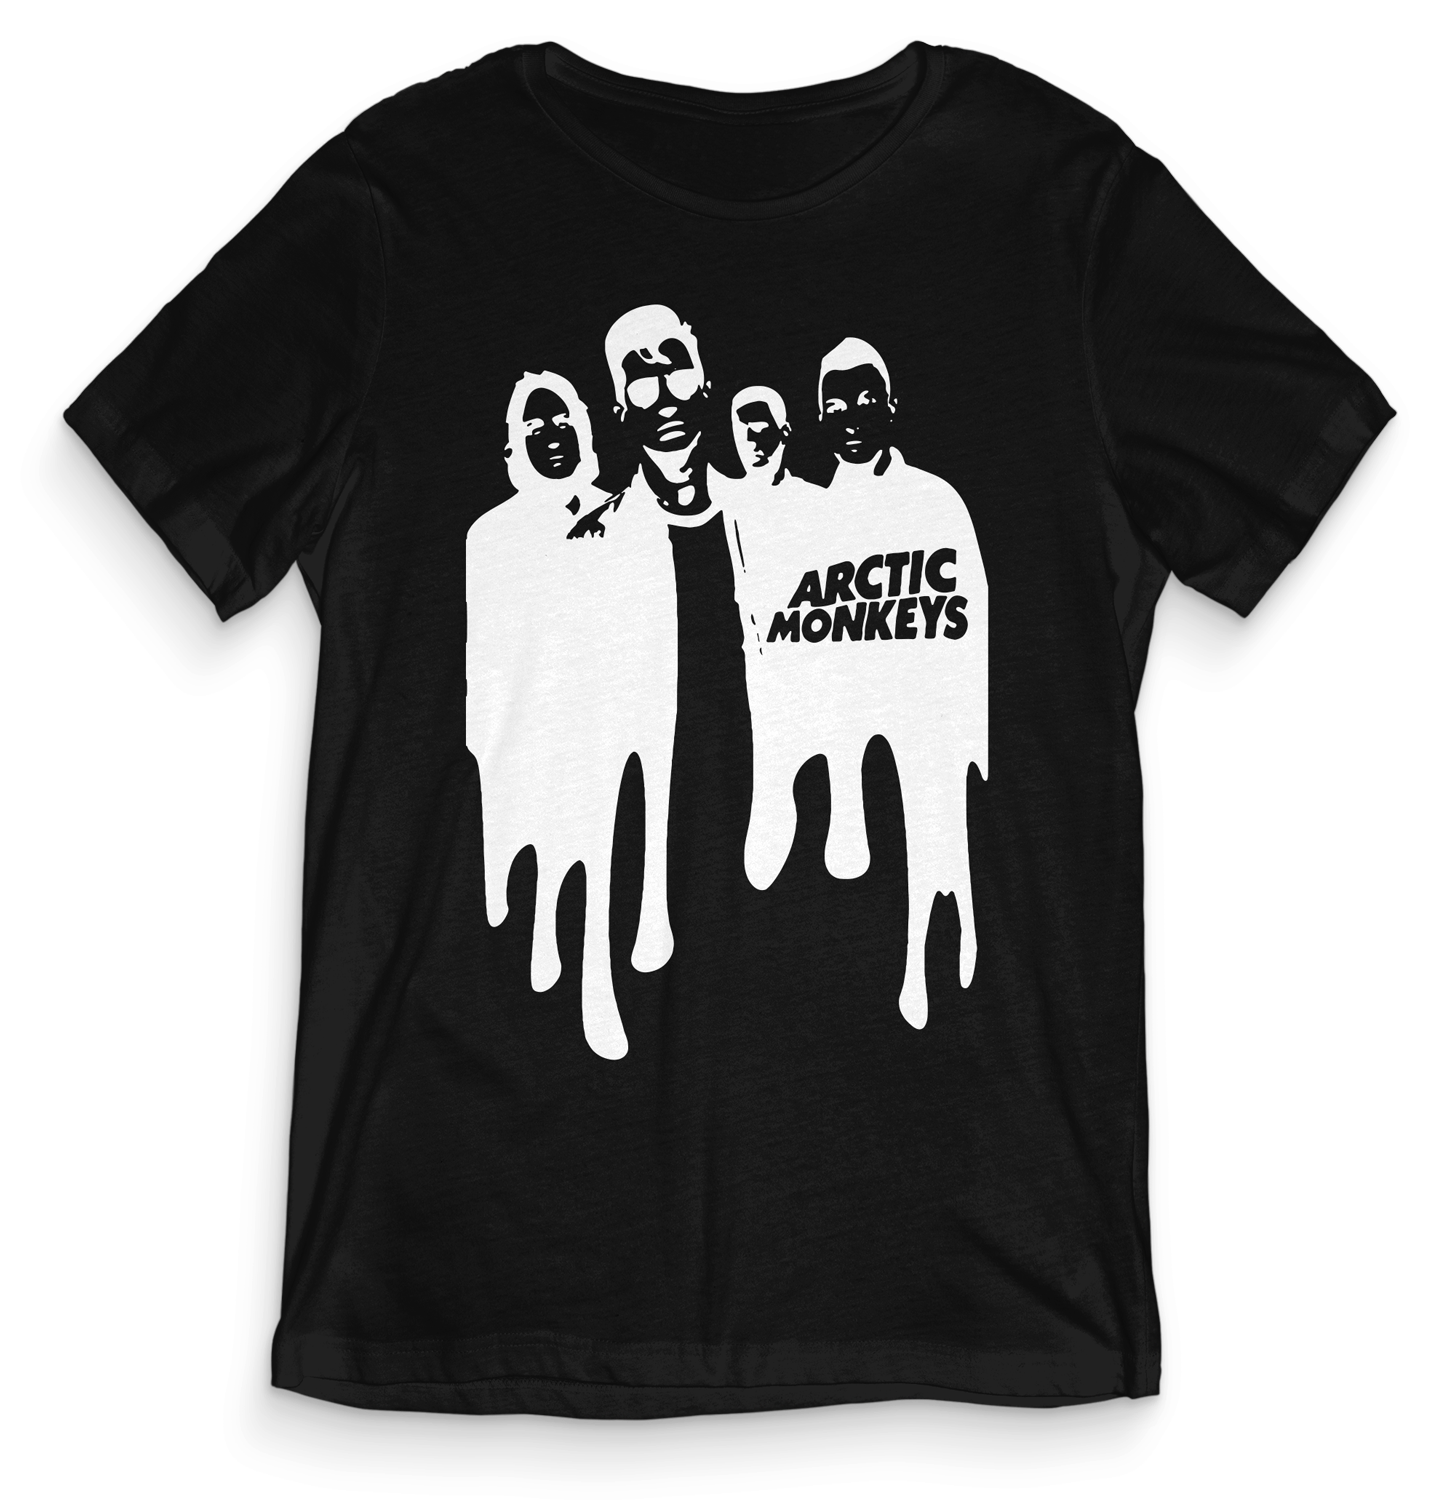 T-shirt Rock - Arctic Monkeys The Band